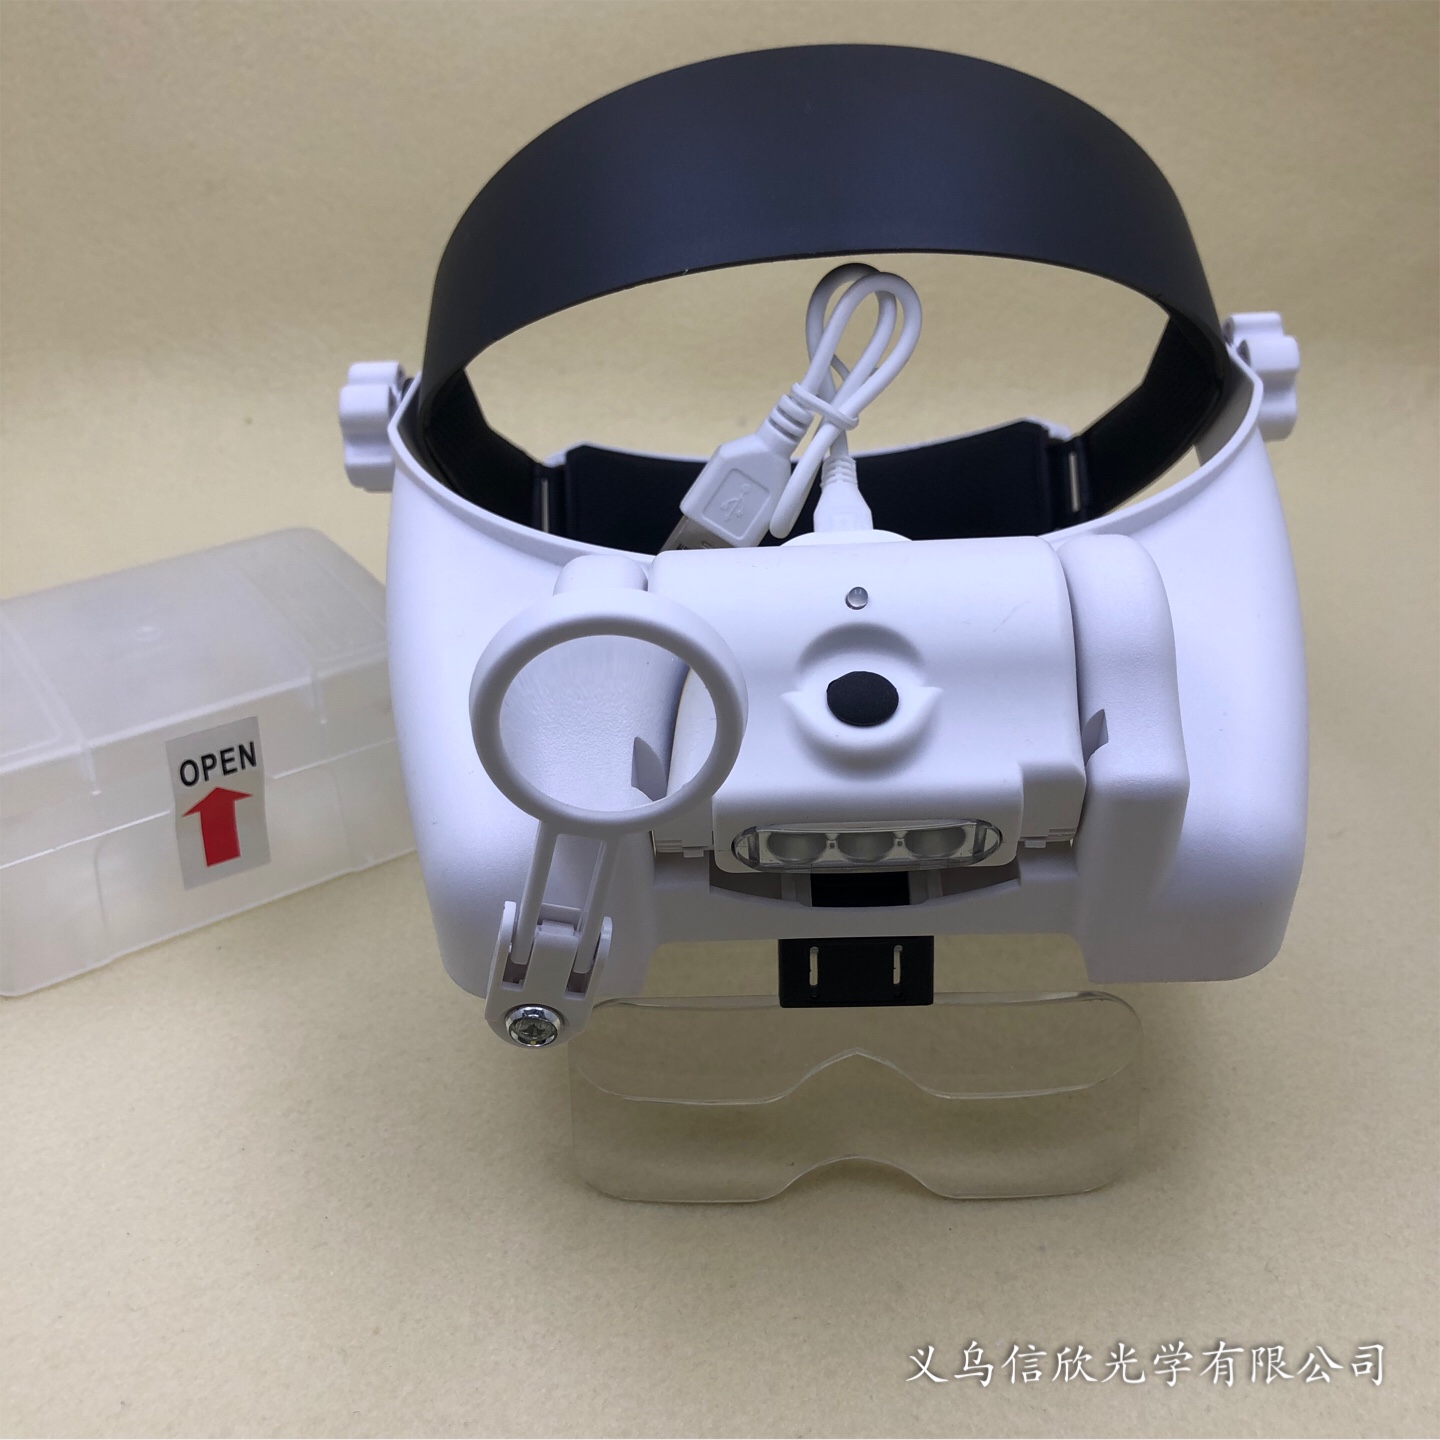 82000-MC头戴式可充电放大镜产品图